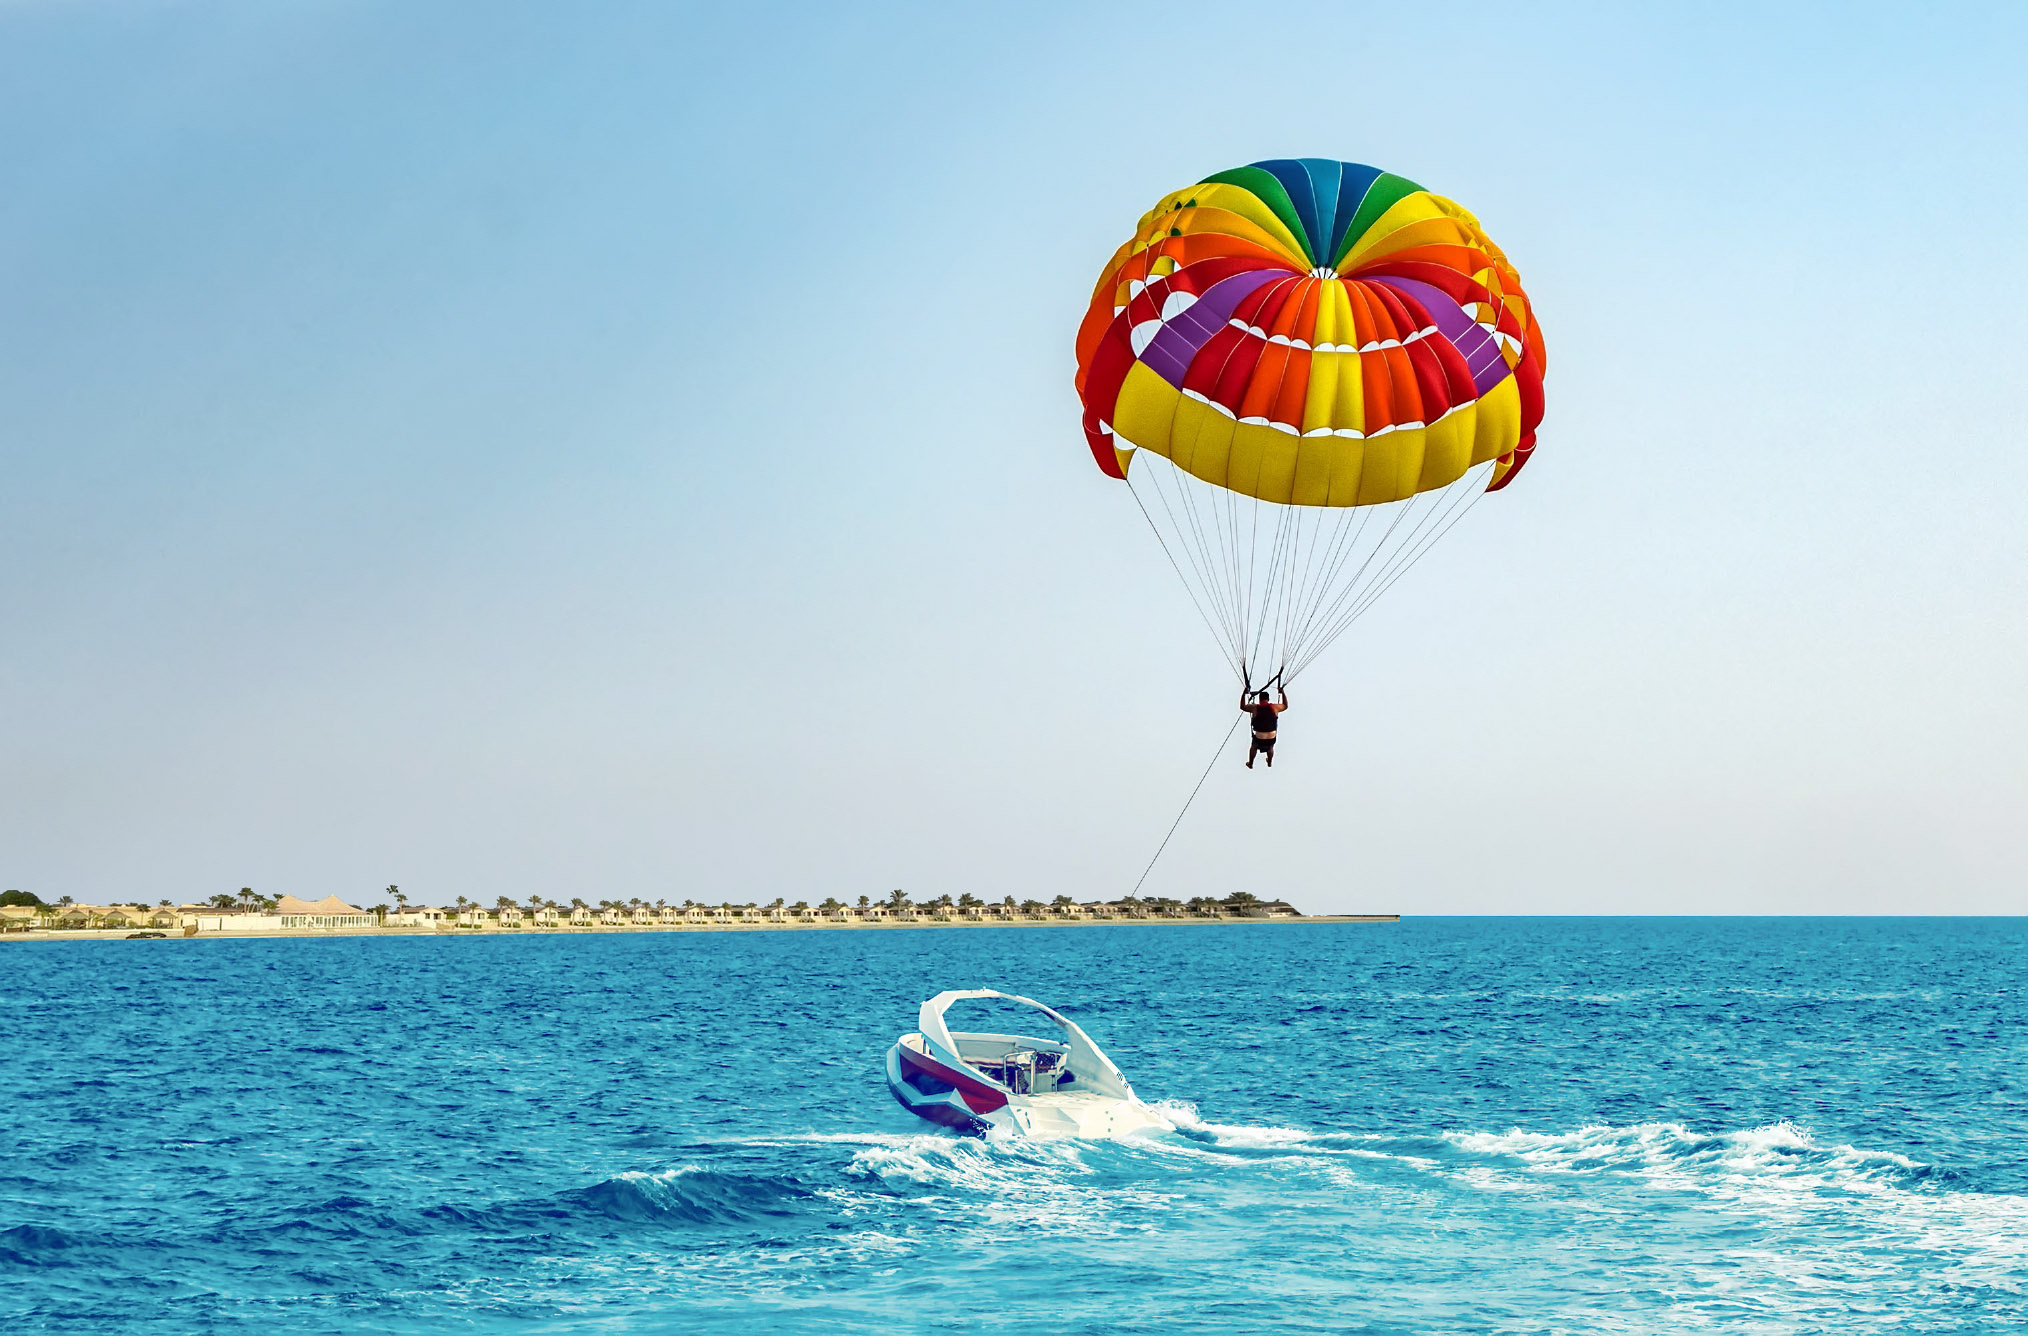 Parasailing: A man sailing in the air, A beautifully colored parachute, A recreational kiting activity, Saudi Arabia, Aqua sports. 2030x1340 HD Wallpaper.